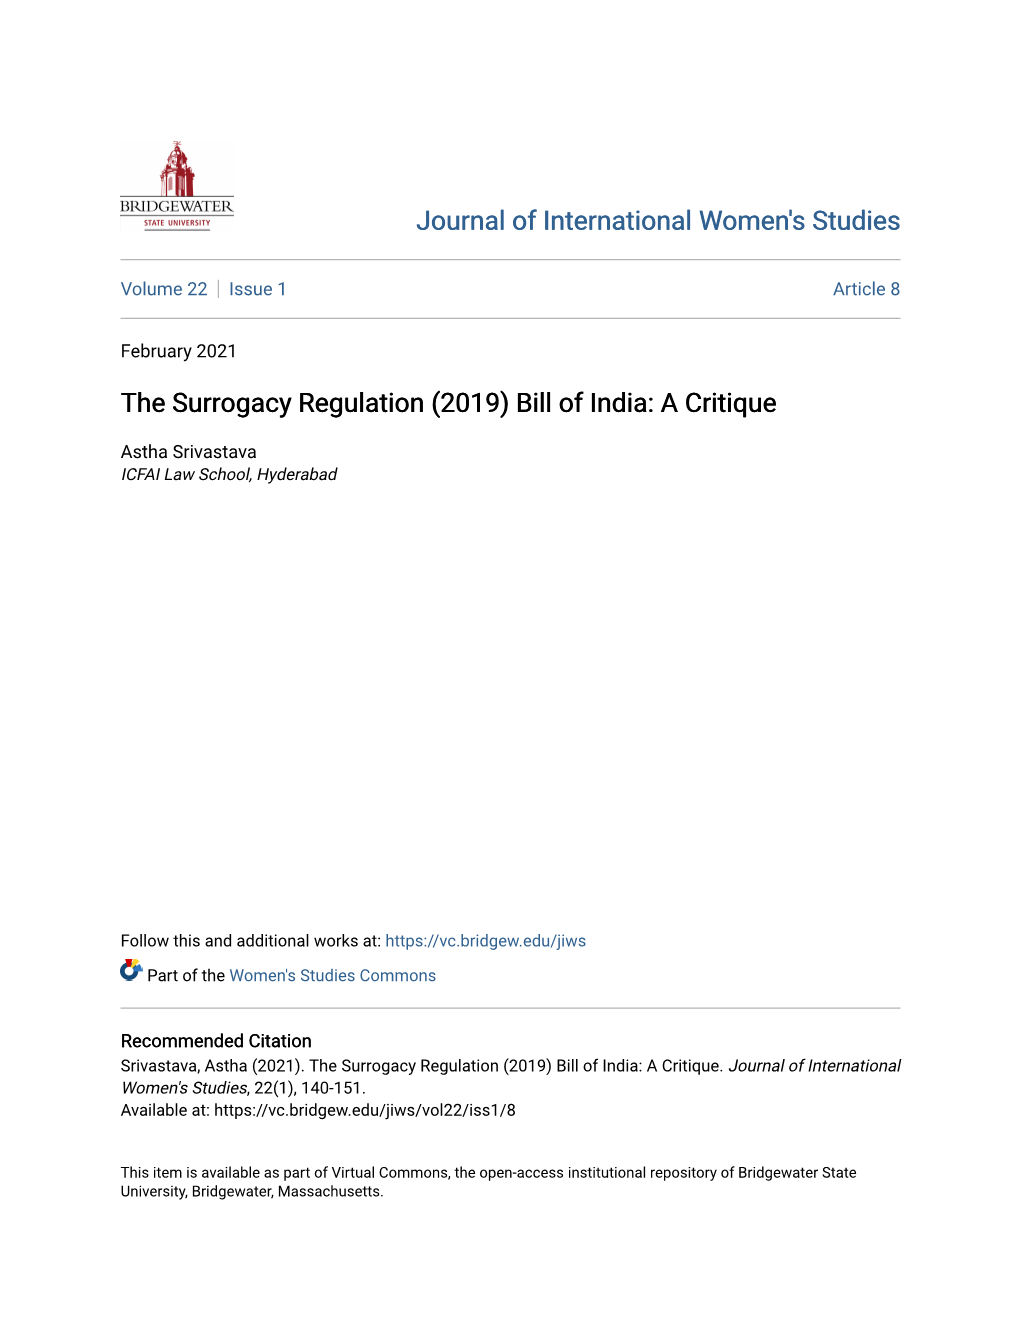 The Surrogacy Regulation (2019) Bill of India: a Critique